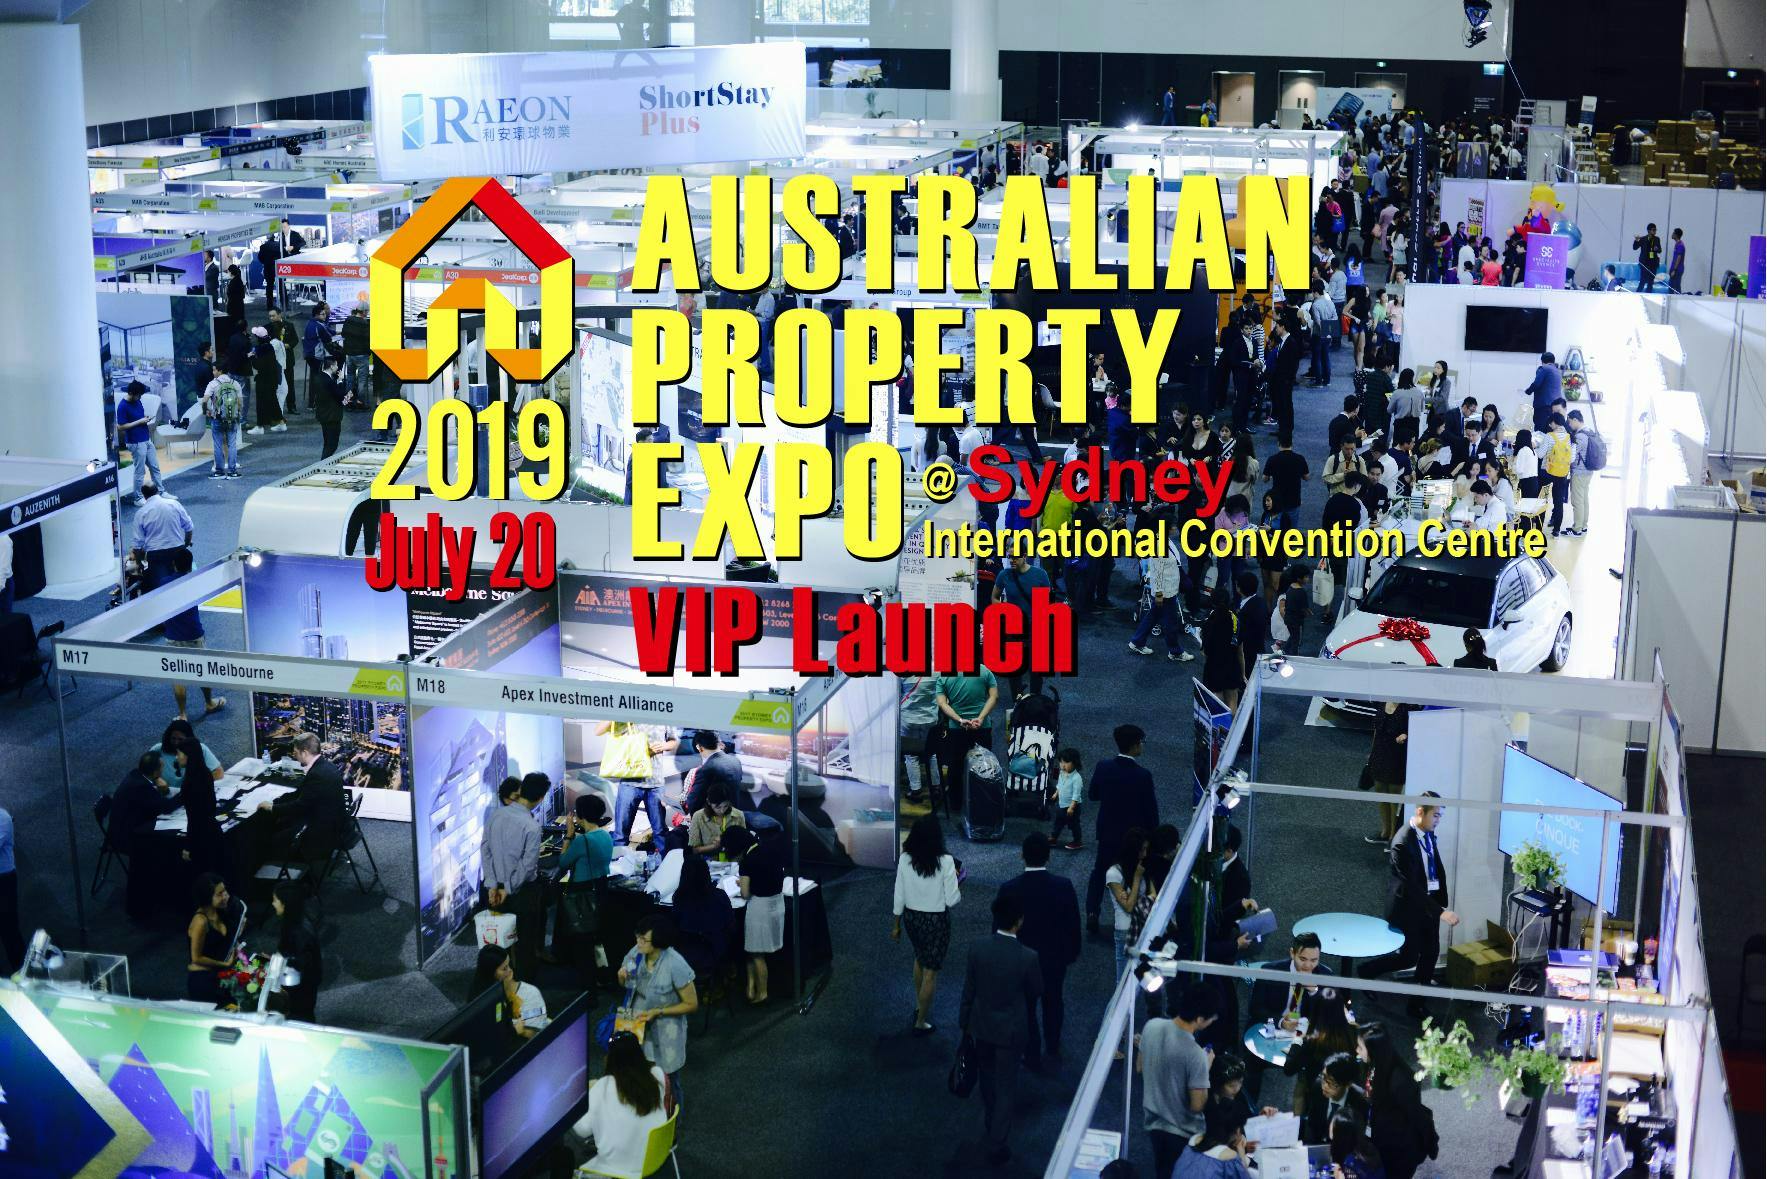 2019 Australian Property Expo - Sydney VIP Launch